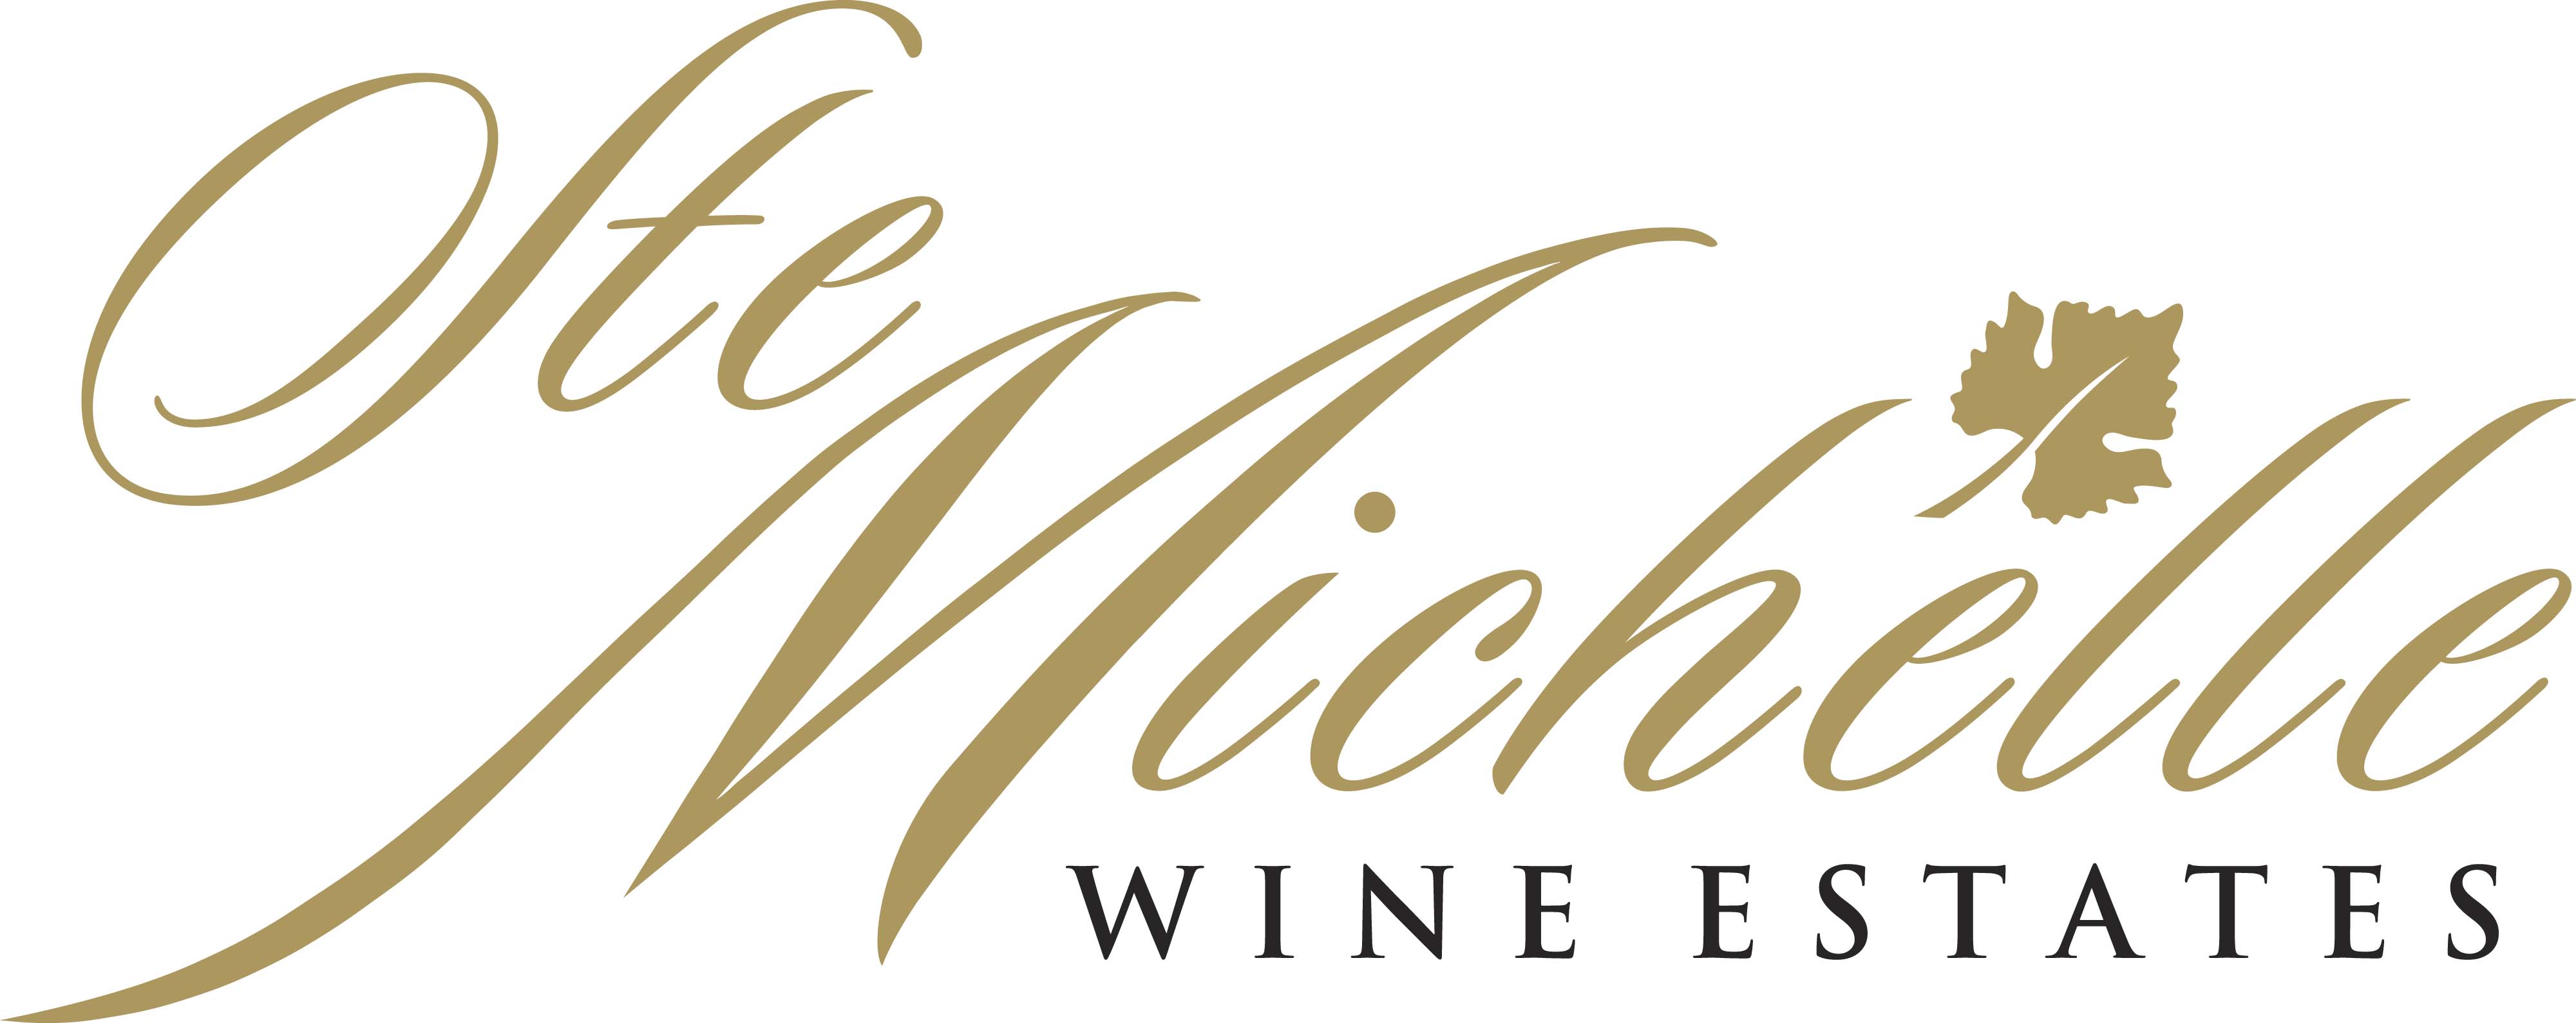 Ste. Michelle Wine Estates logo